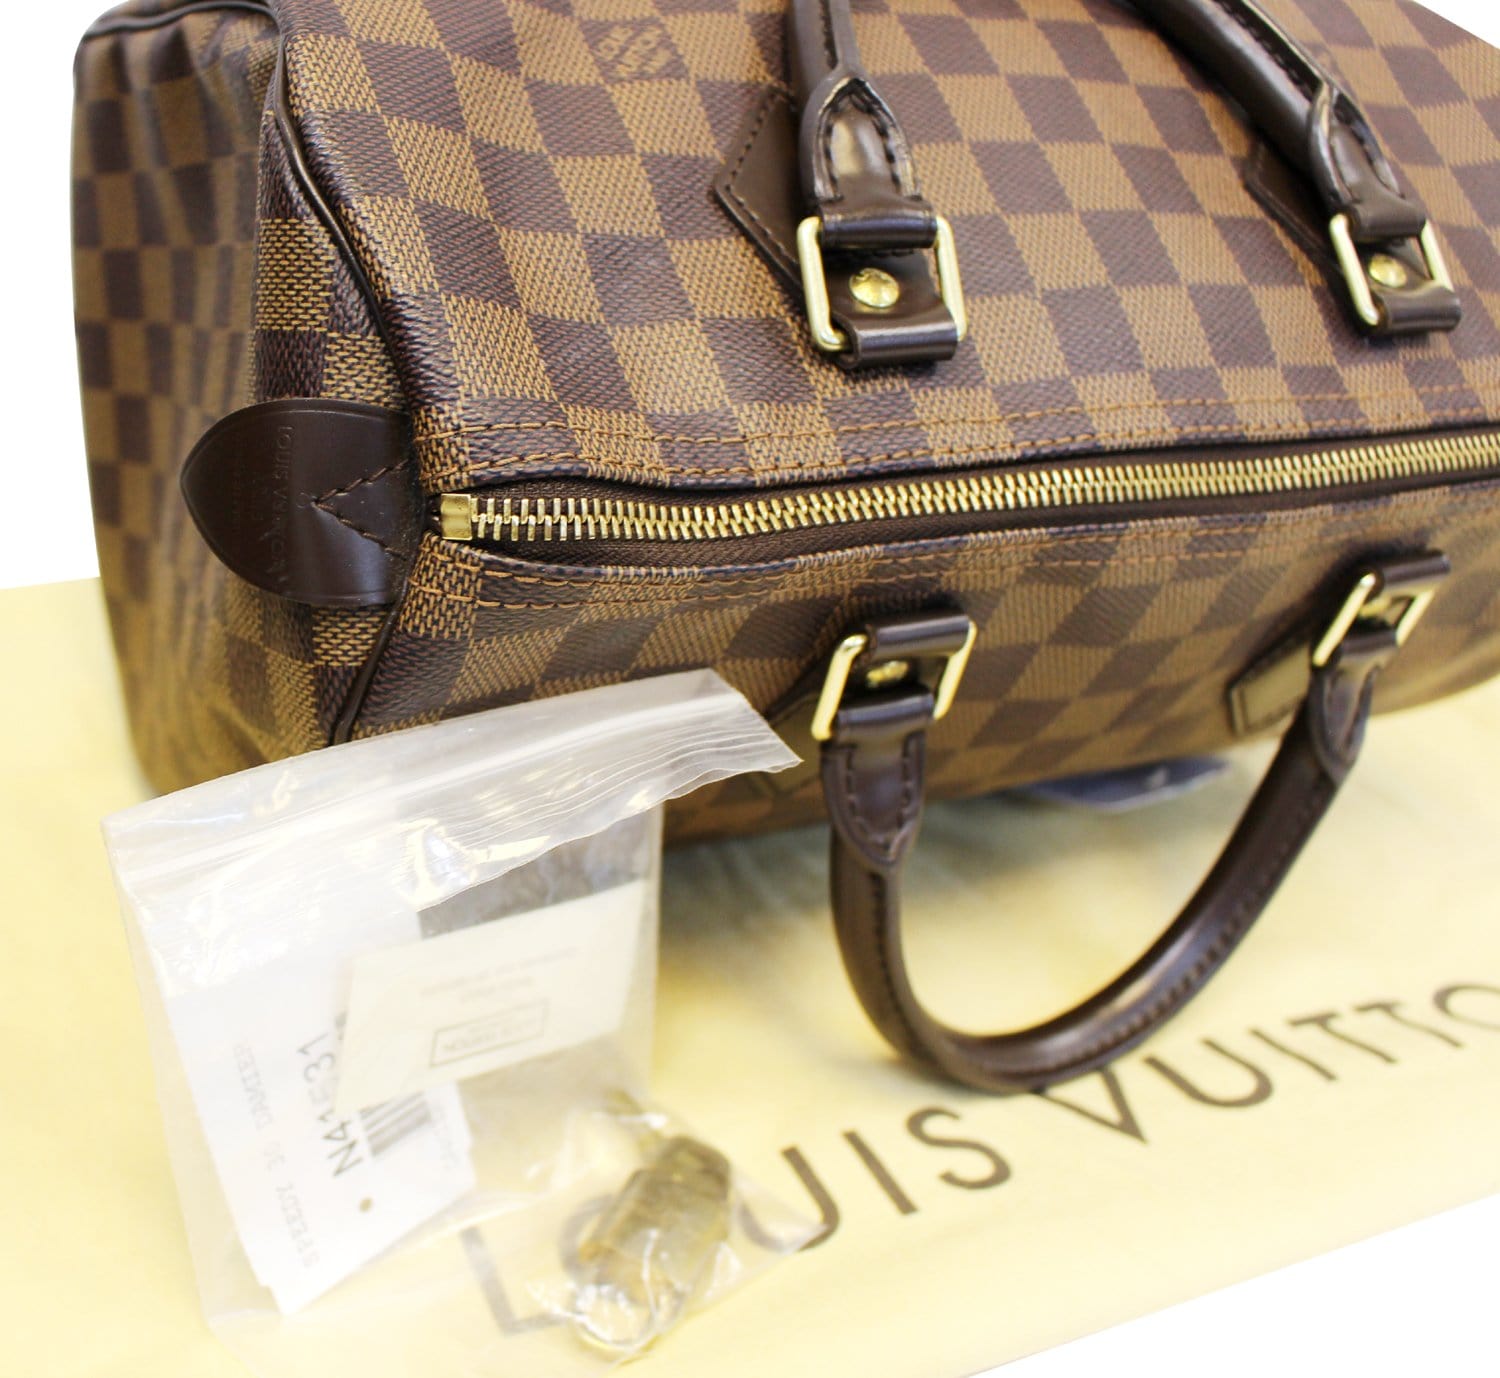 Louis Vuitton Damier Ebene Canvas Speedy Bags 30 N41531  Louis vuitton  handbags outlet, Louis vuitton handbags, Fashion